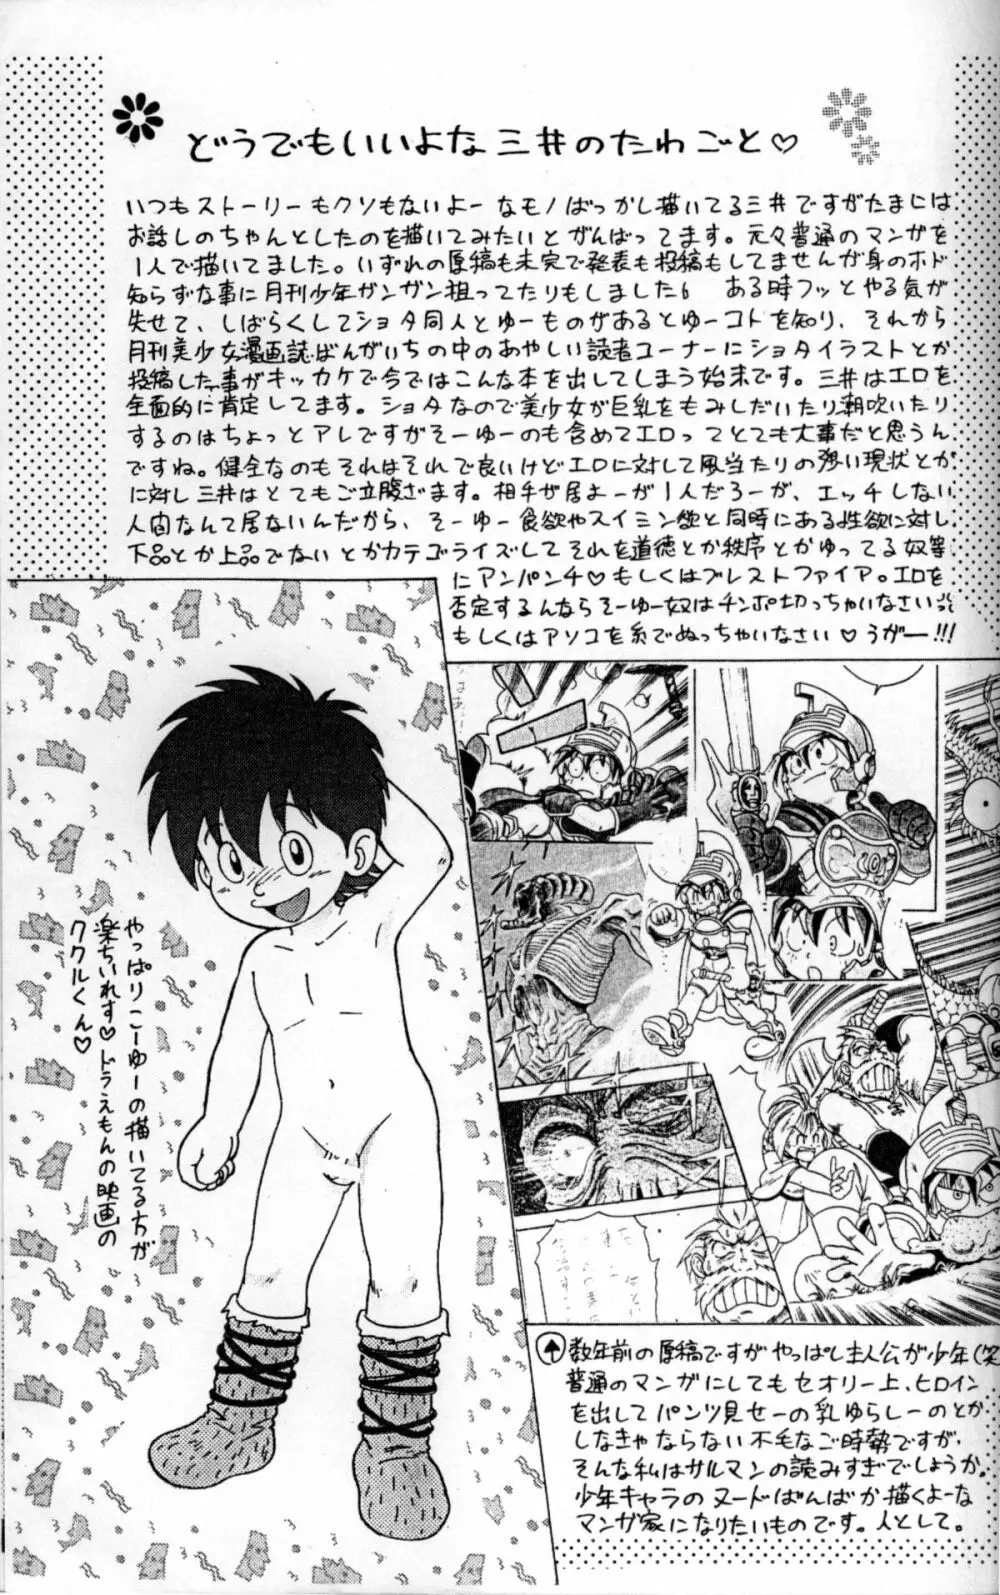 Mitsui Jun – Dreamer’s Only – Anime Shota Character Mix 14ページ